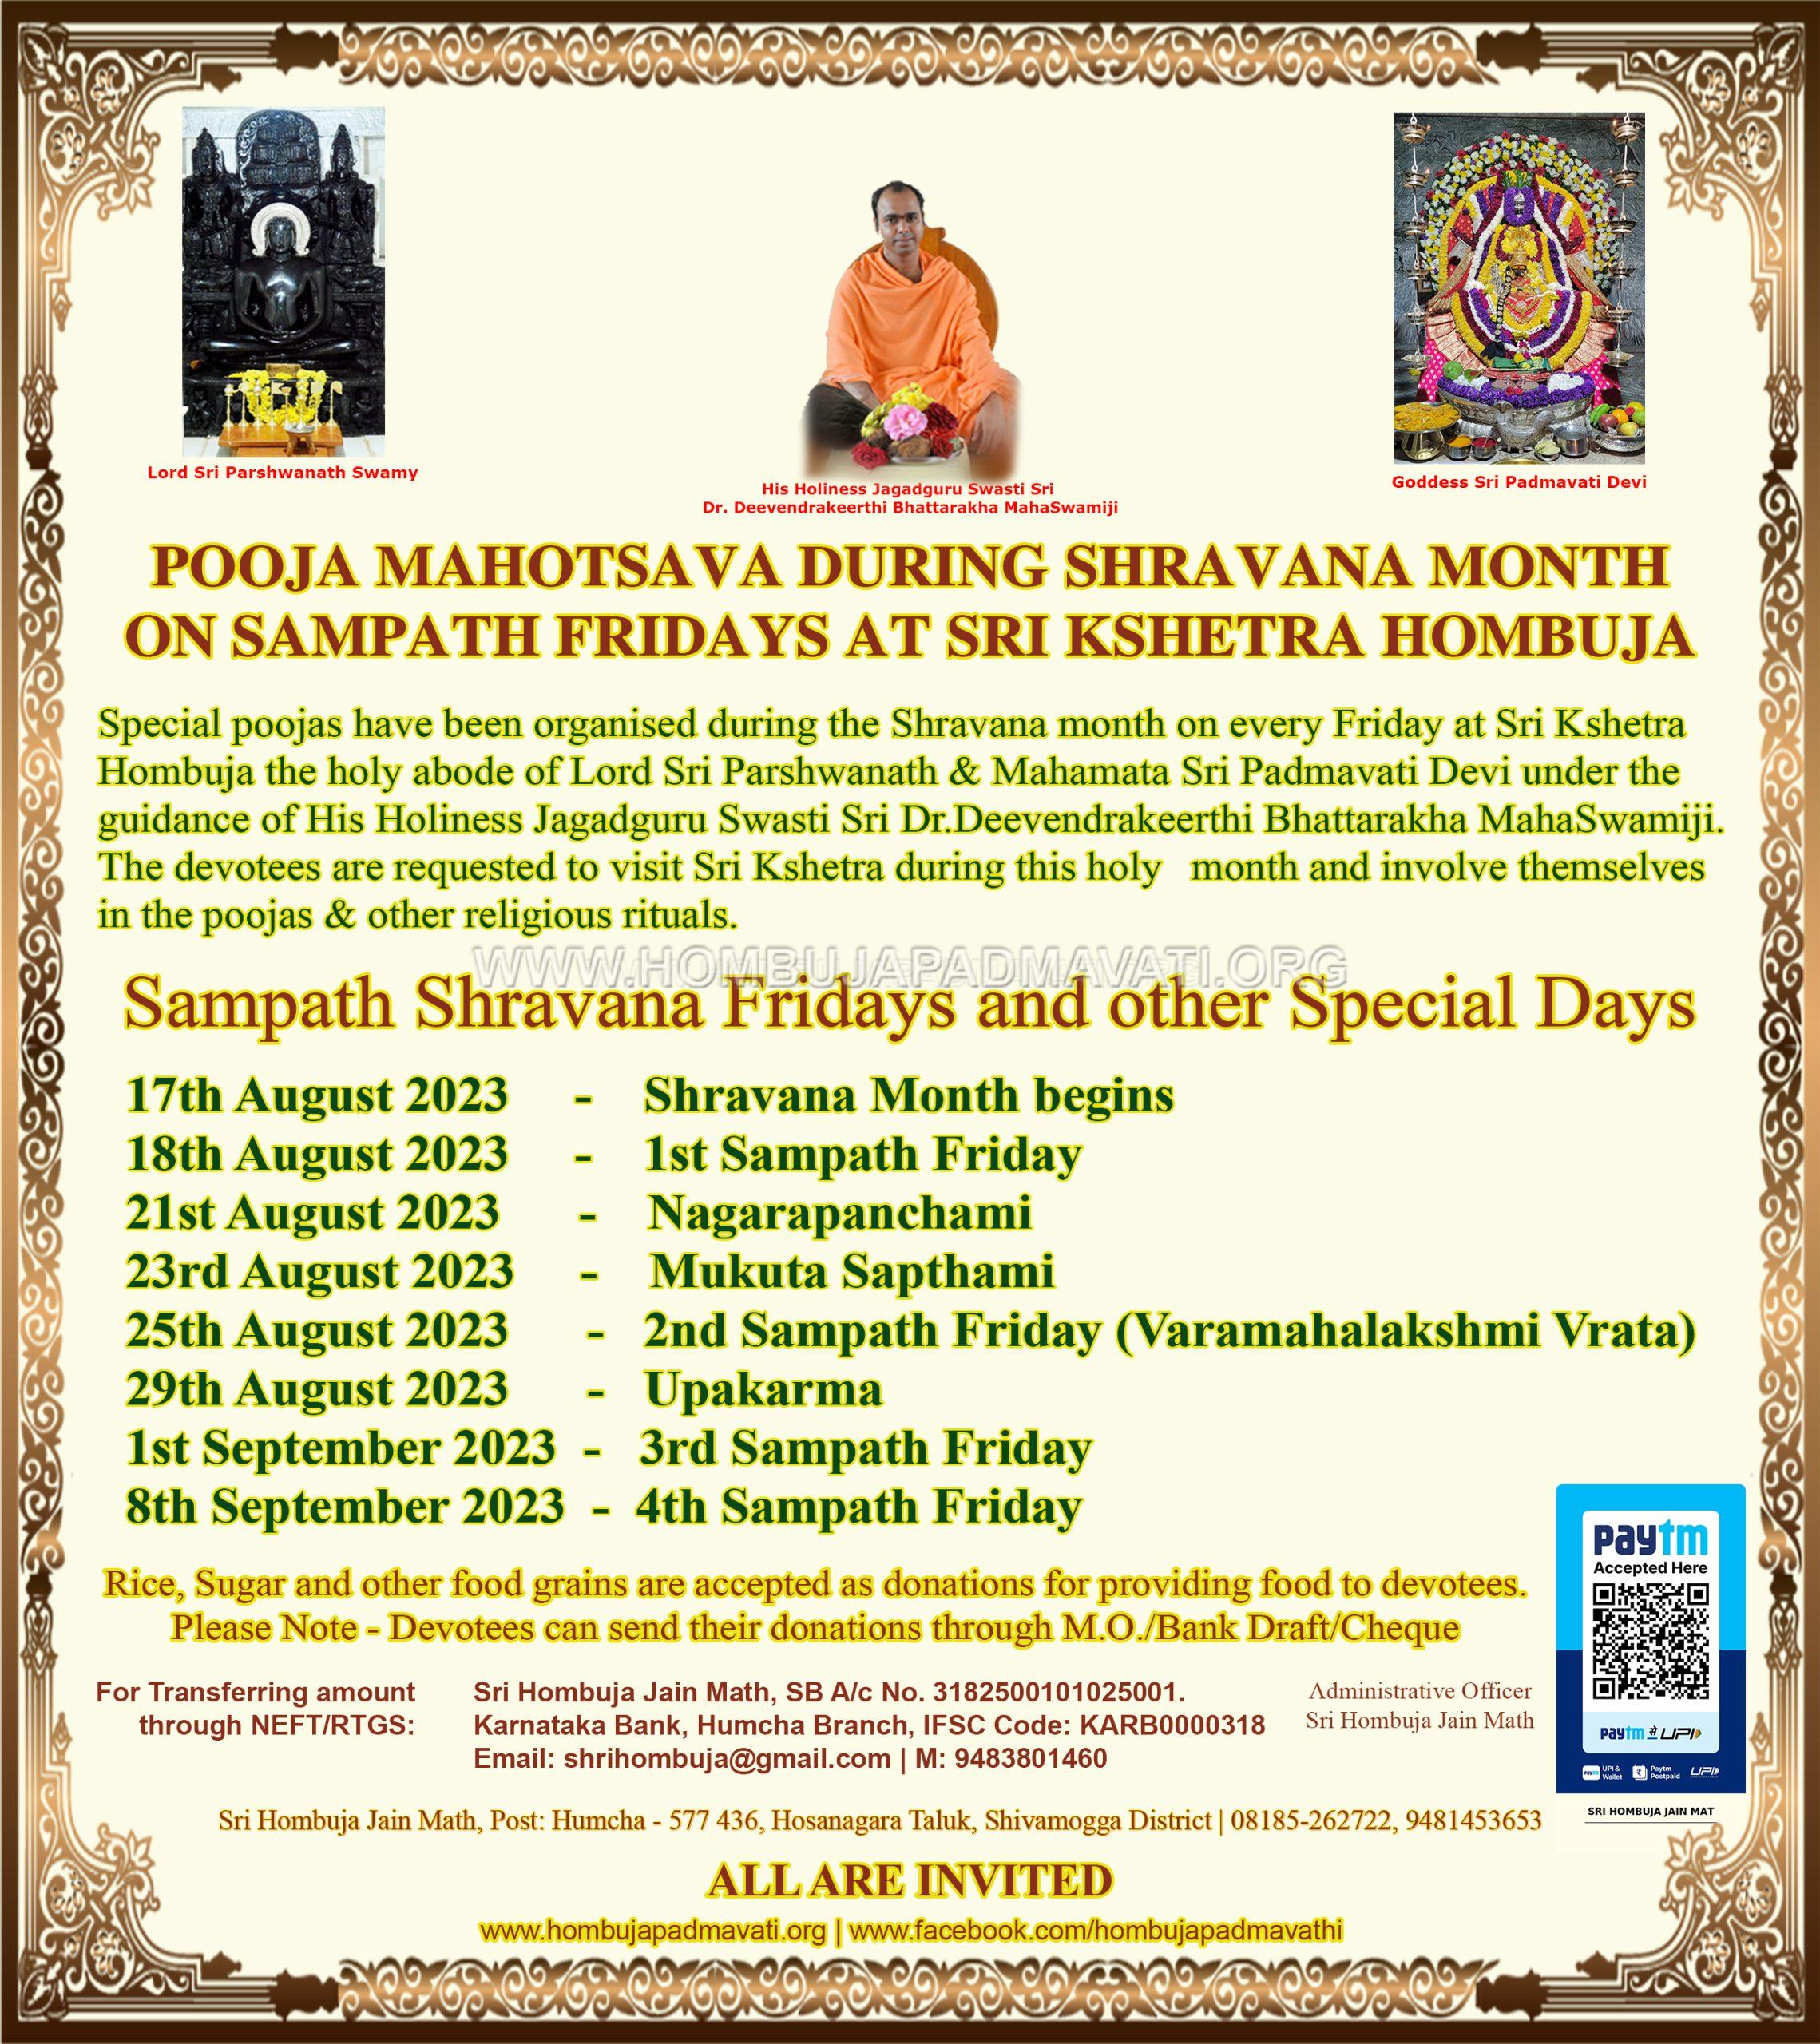 Pooja-Mahotsava-During-Shravana-Month-on-Sampath-Fridays-at-Sri-Kshetra-Hombuja-English